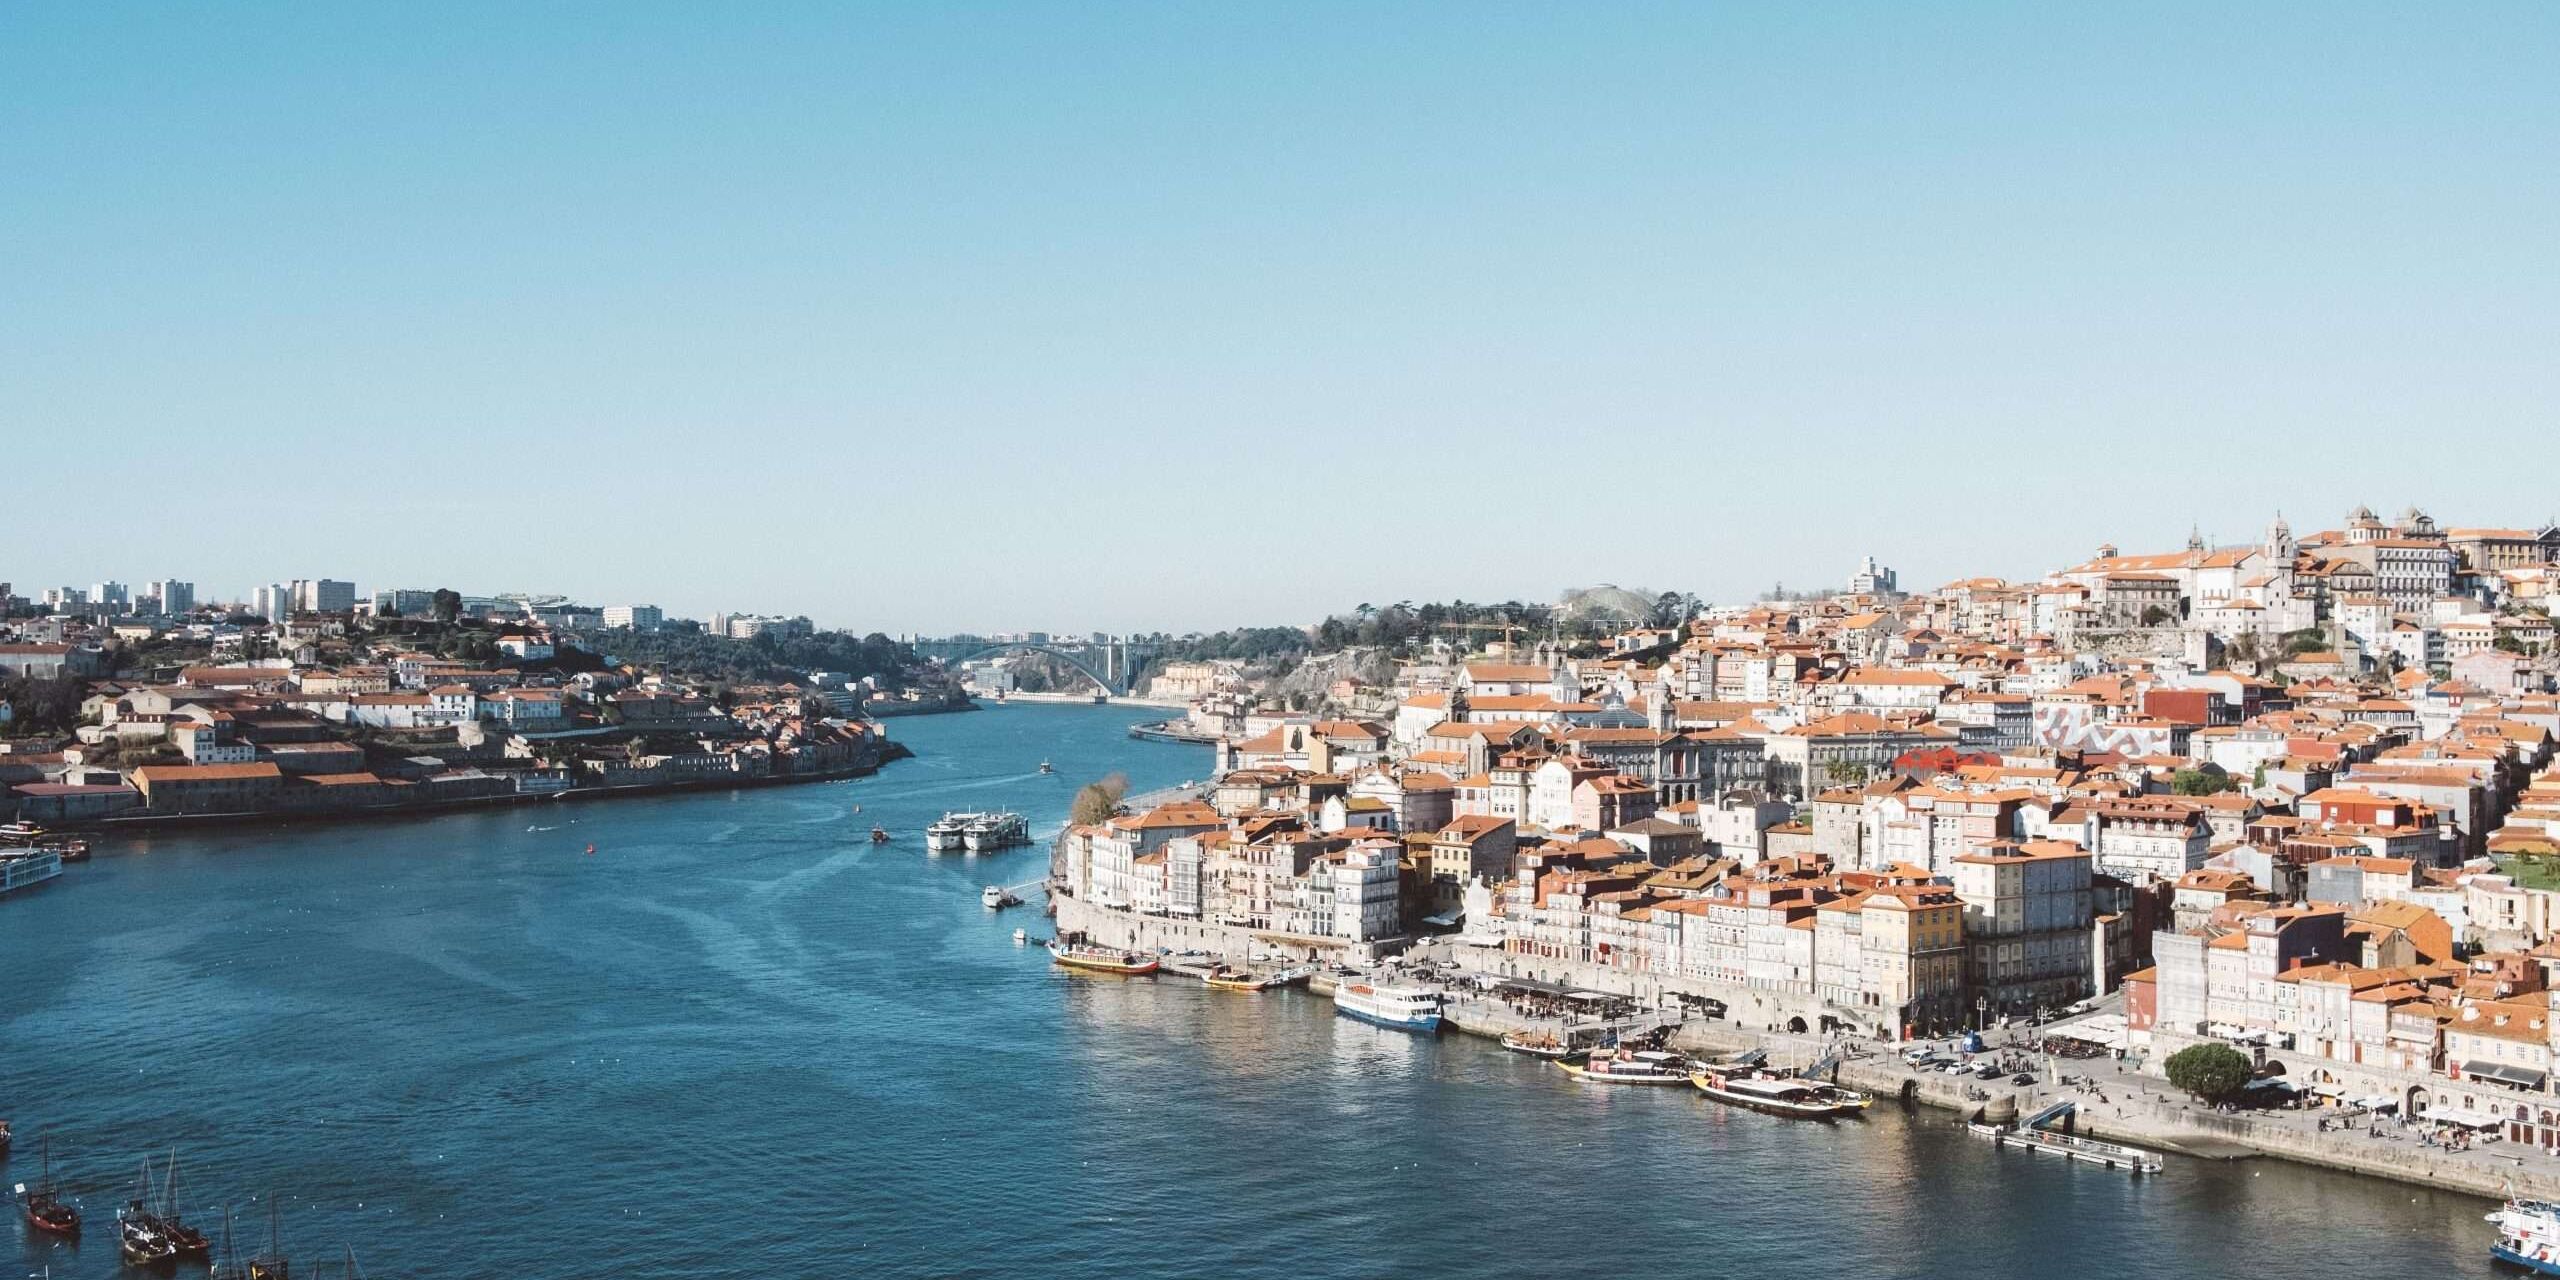 Portugal river and city landscape